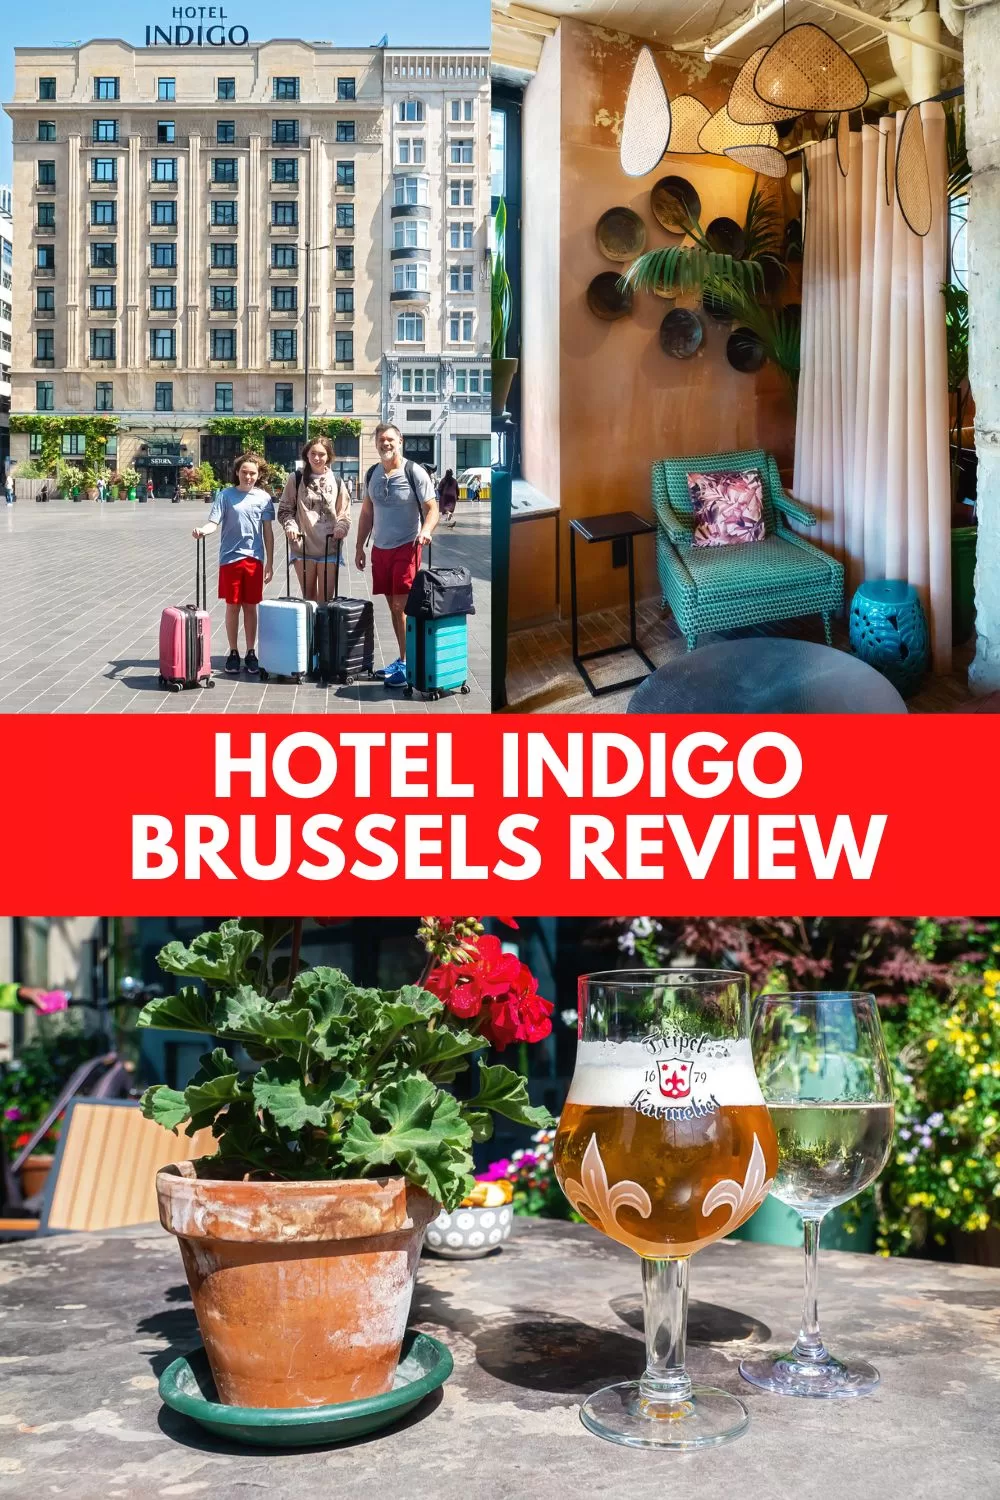 Travel Blog About Hotel Indigo Brussels